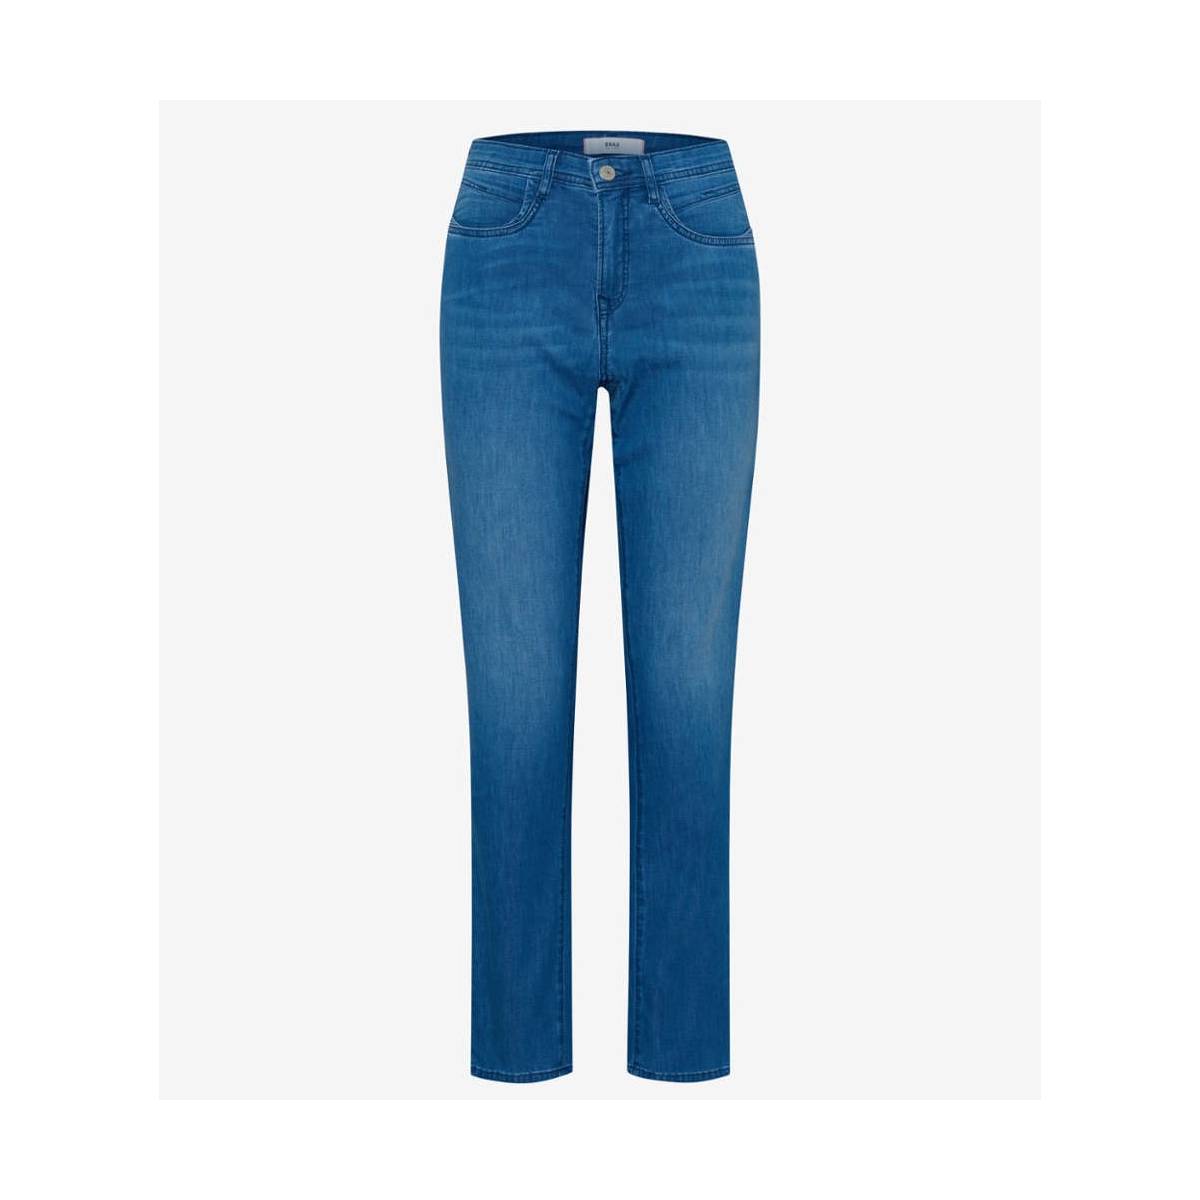 BRAX  broeken lichte jeans -  model 71-7308 09954620 - Dameskleding broeken jeans